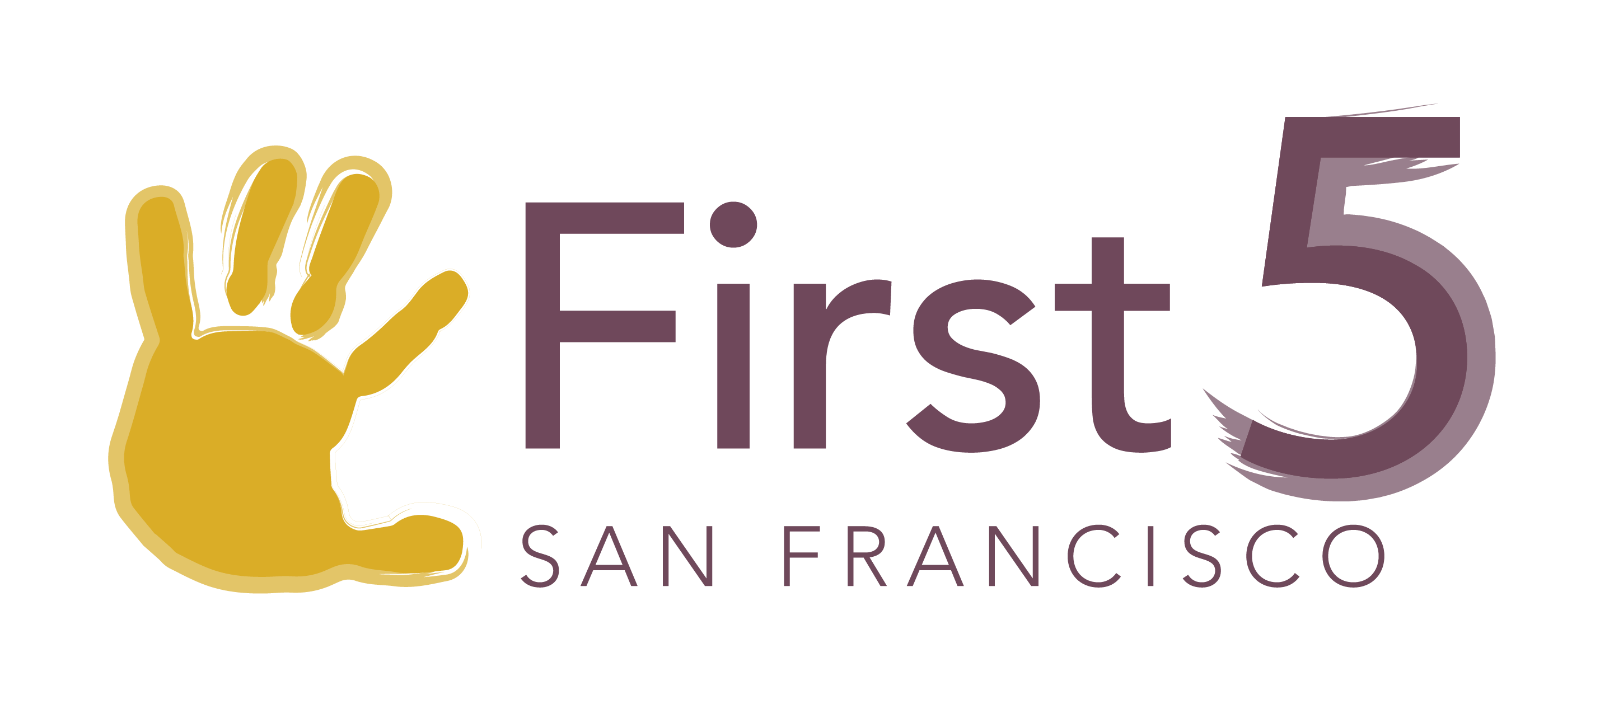 San Francisco First 5